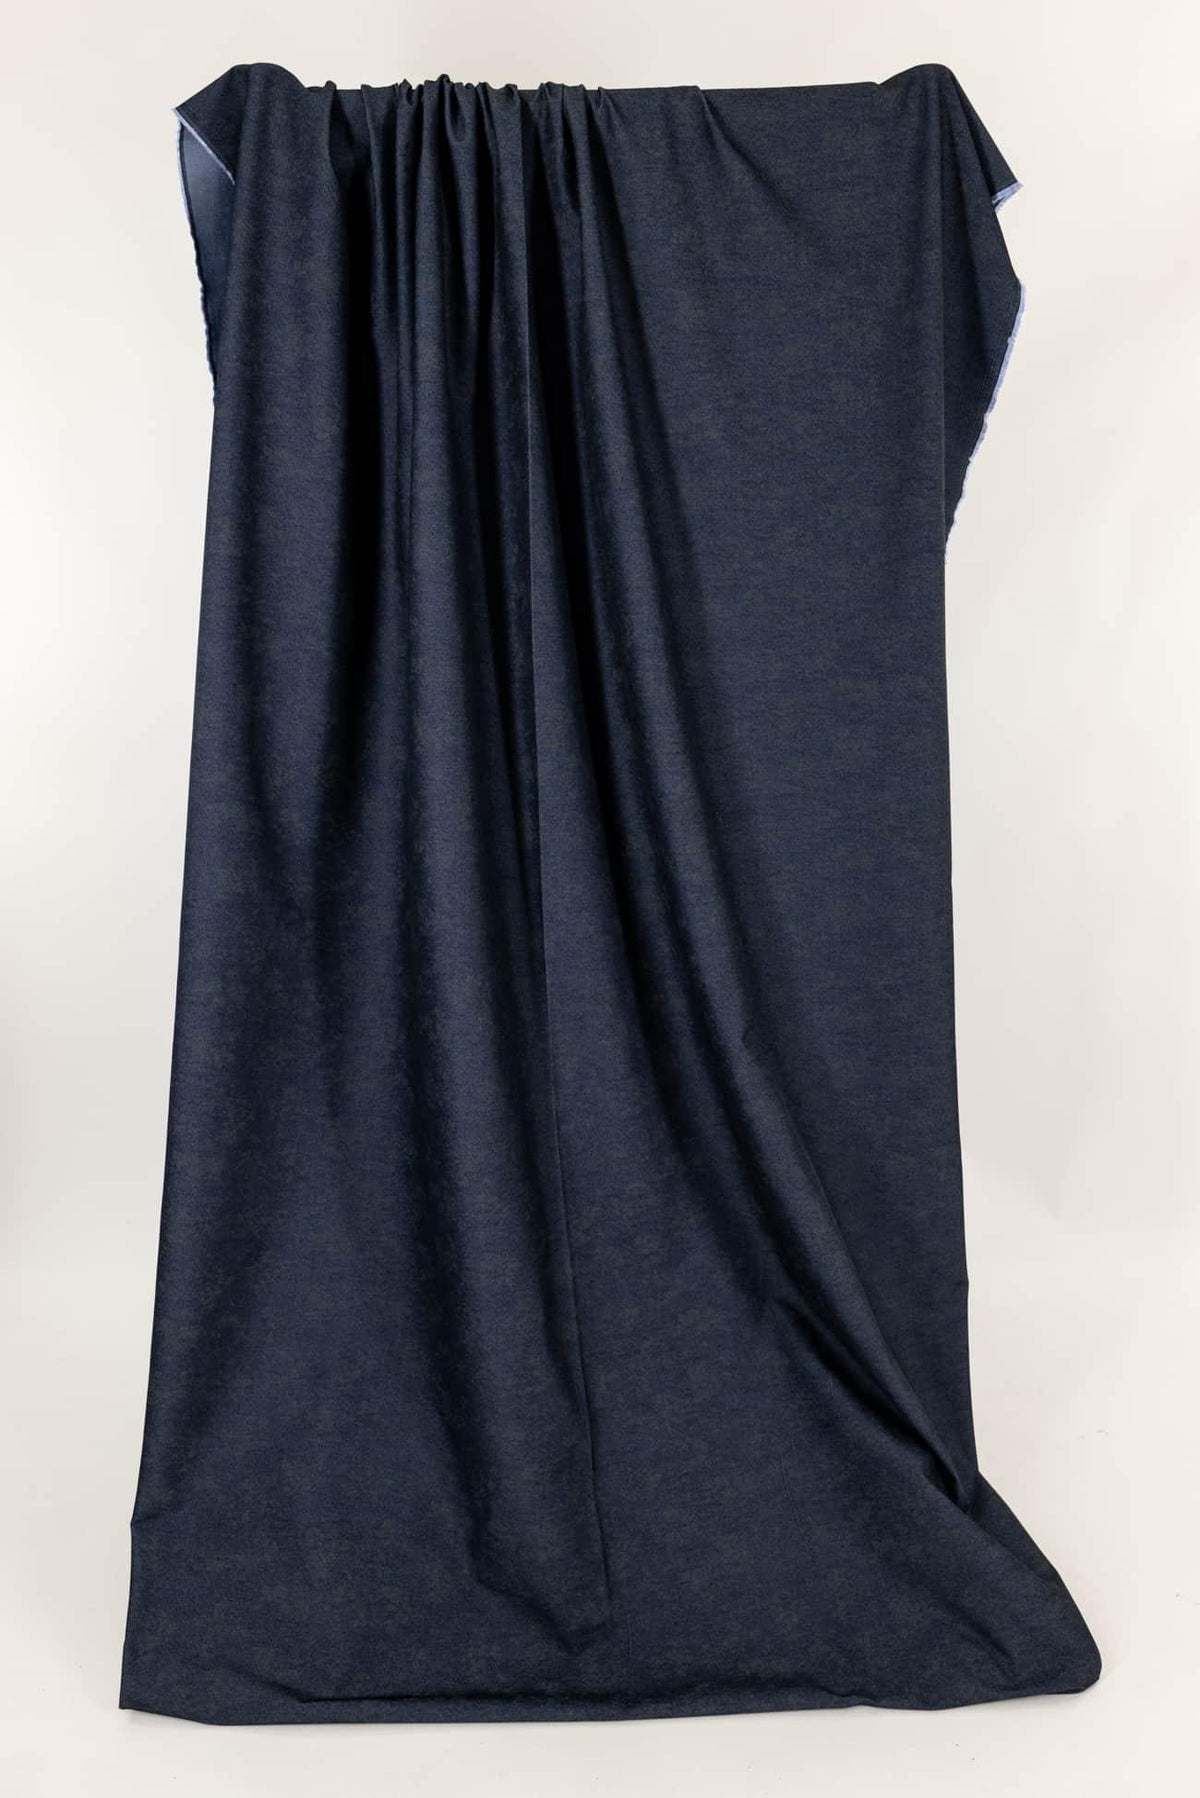 Astral Blue Italian Cotton Denim Woven - Marcy Tilton Fabrics